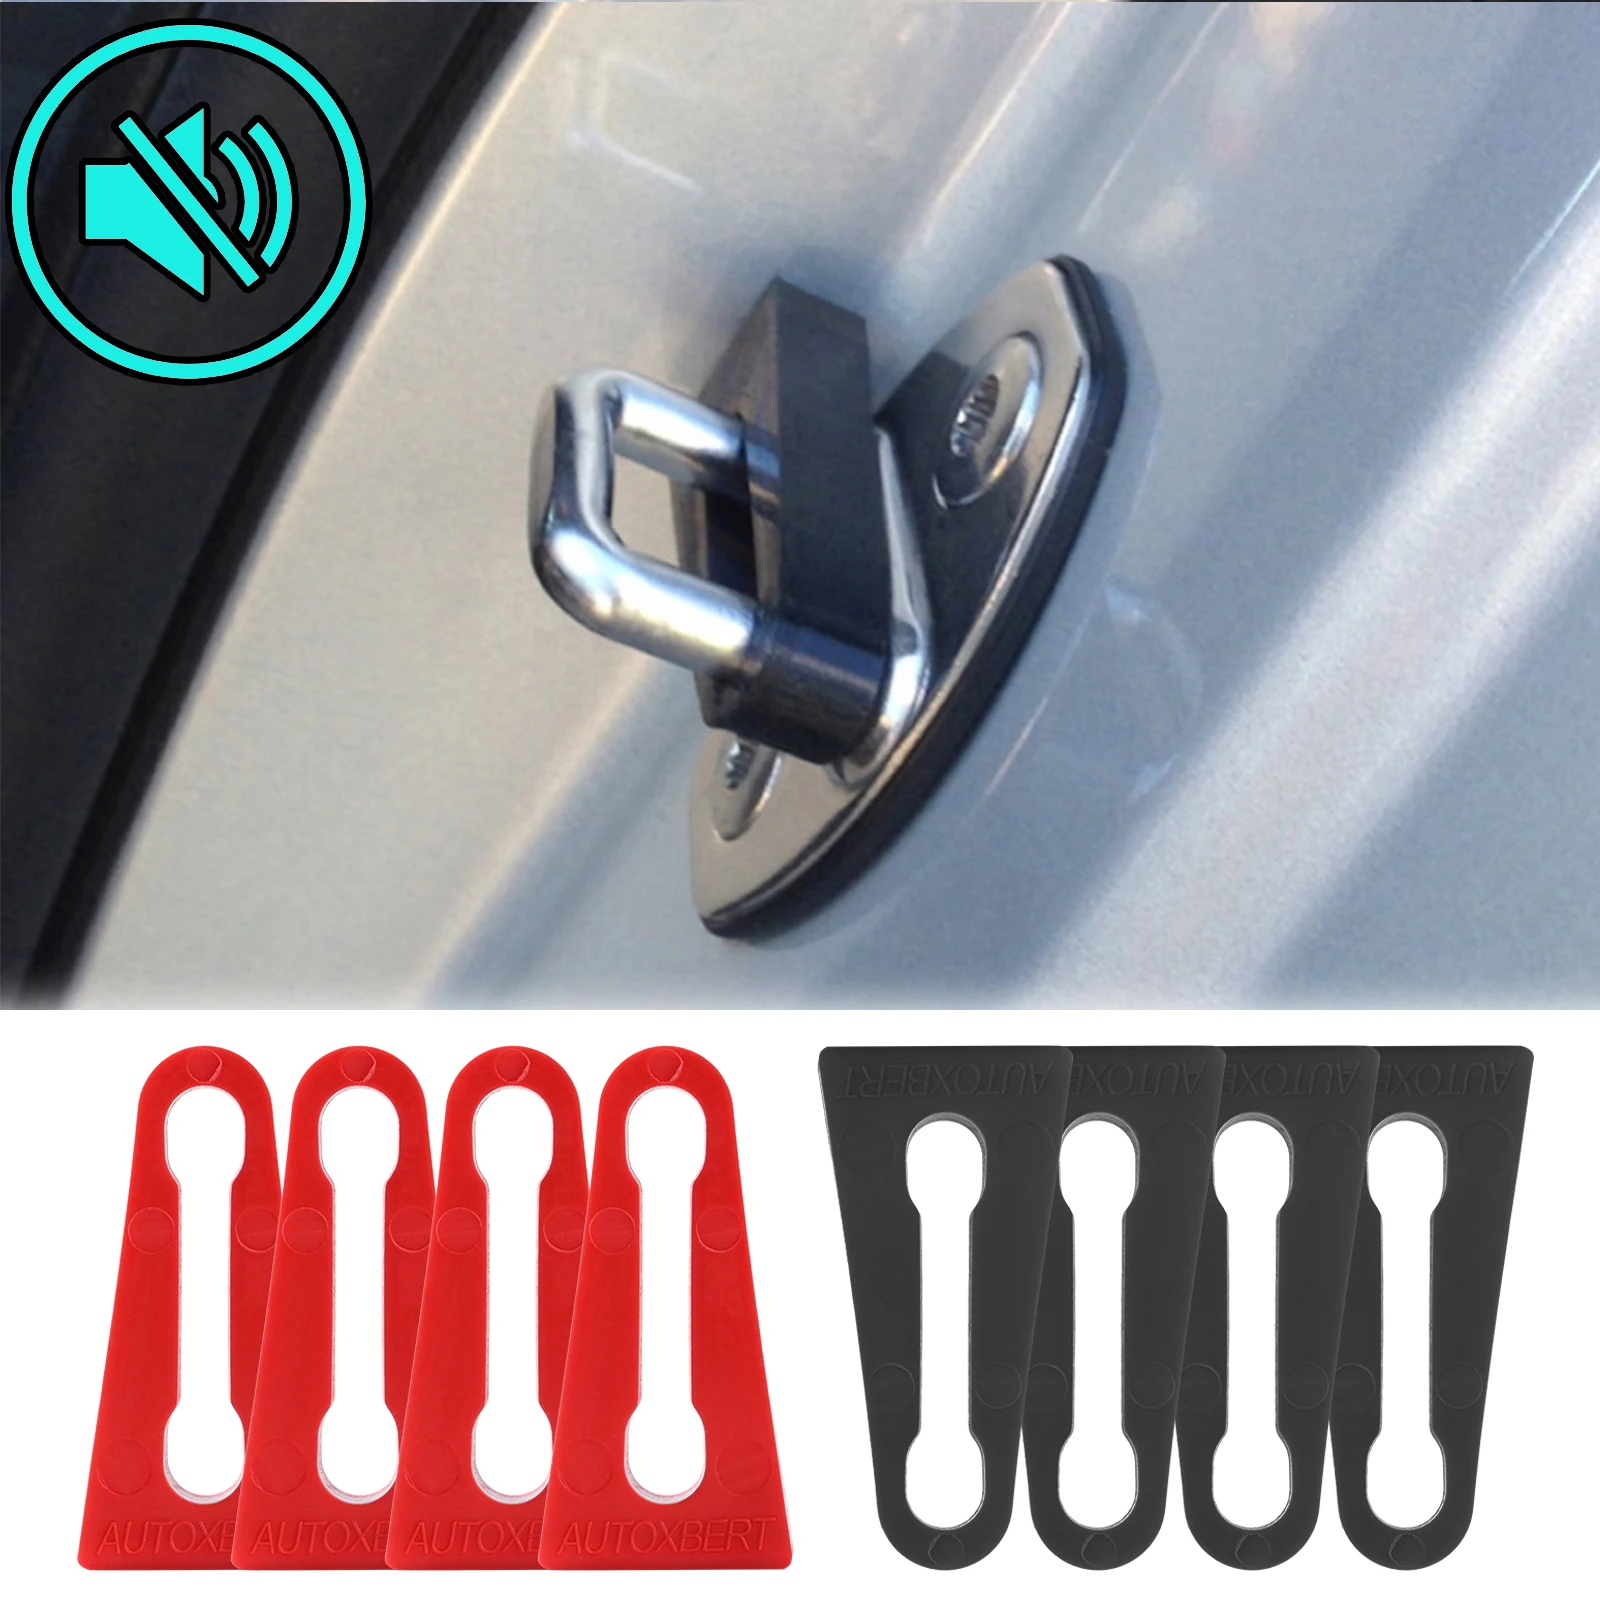 Shock Absorber Rubber For VW Audi Skoda Seat Car Door Lock Striker Buffer Damping Deaf Seal Pad Deadener Quiet Noise Stopper